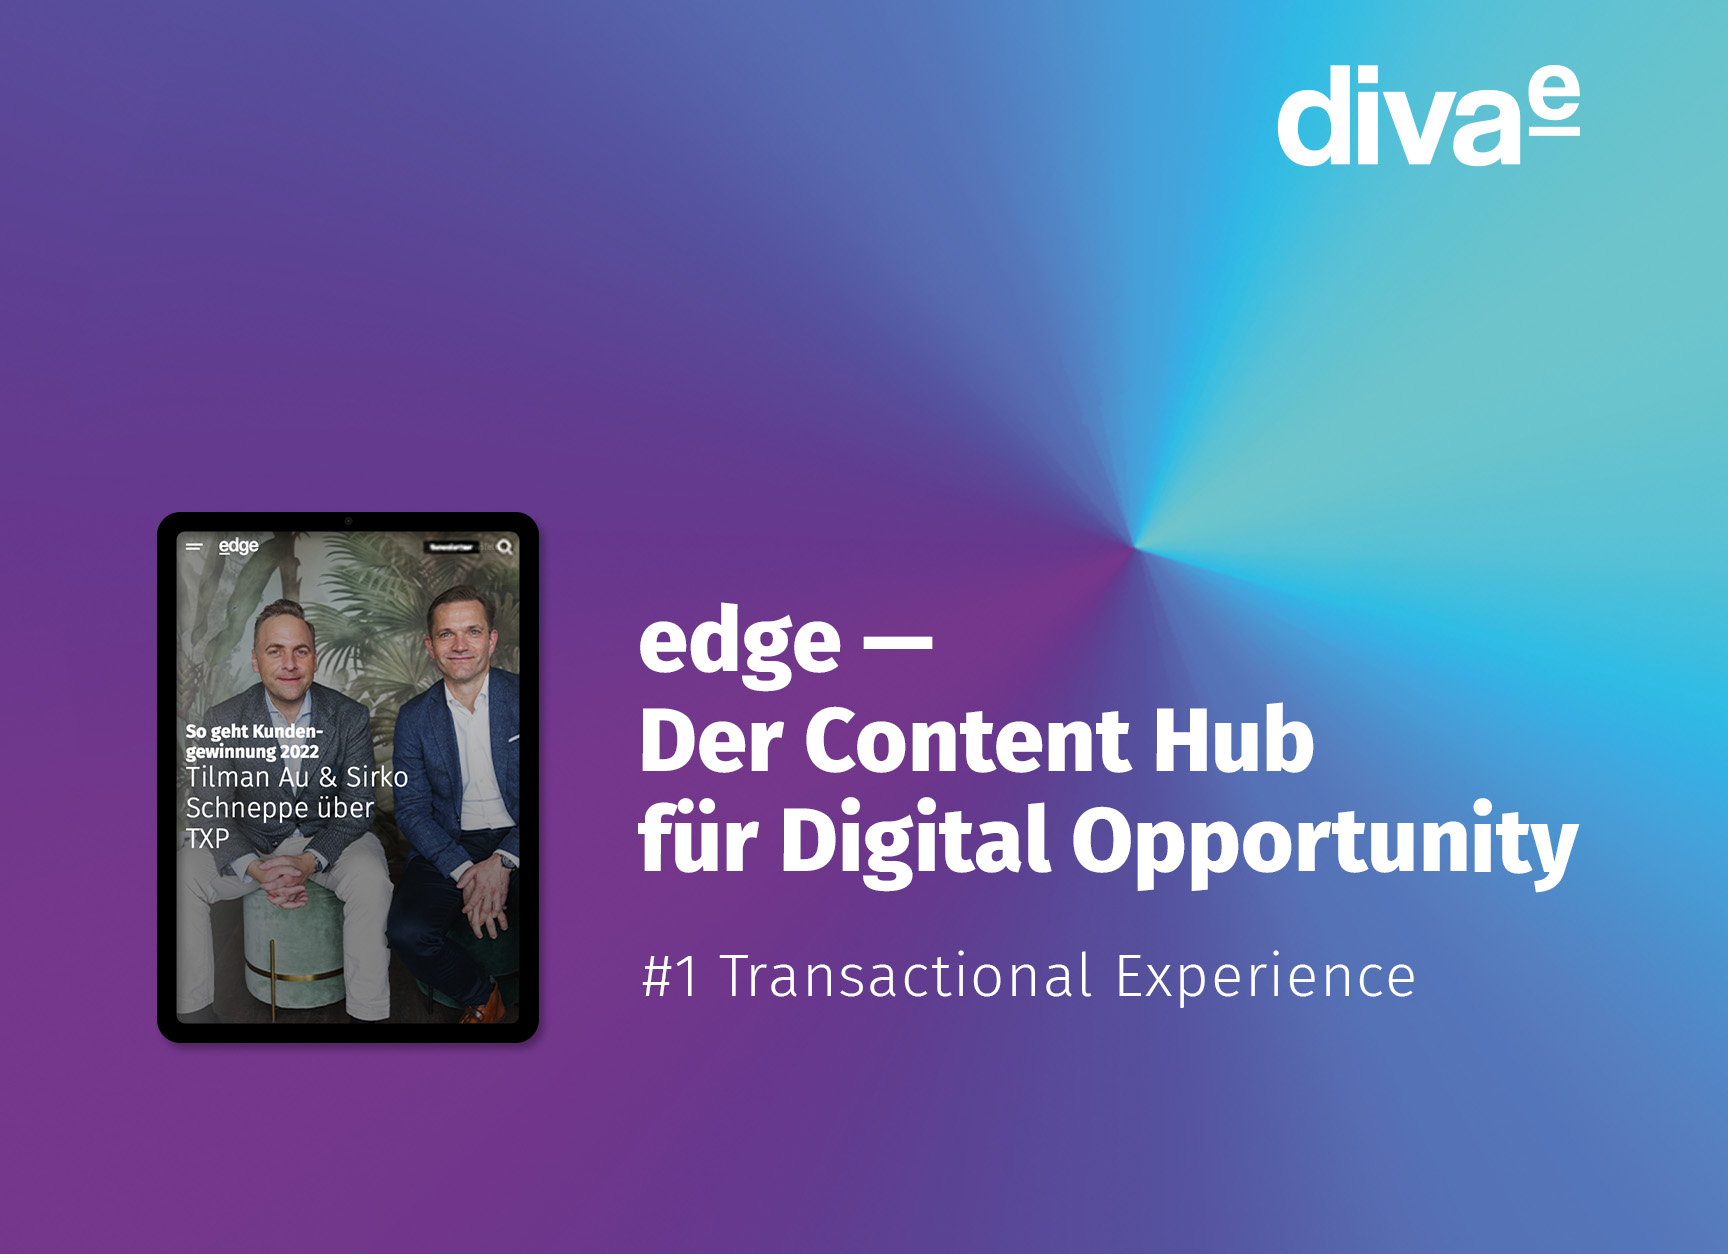 Over the „edge“: diva-e launcht E-Magazin zu aktuellen Digitaltrends